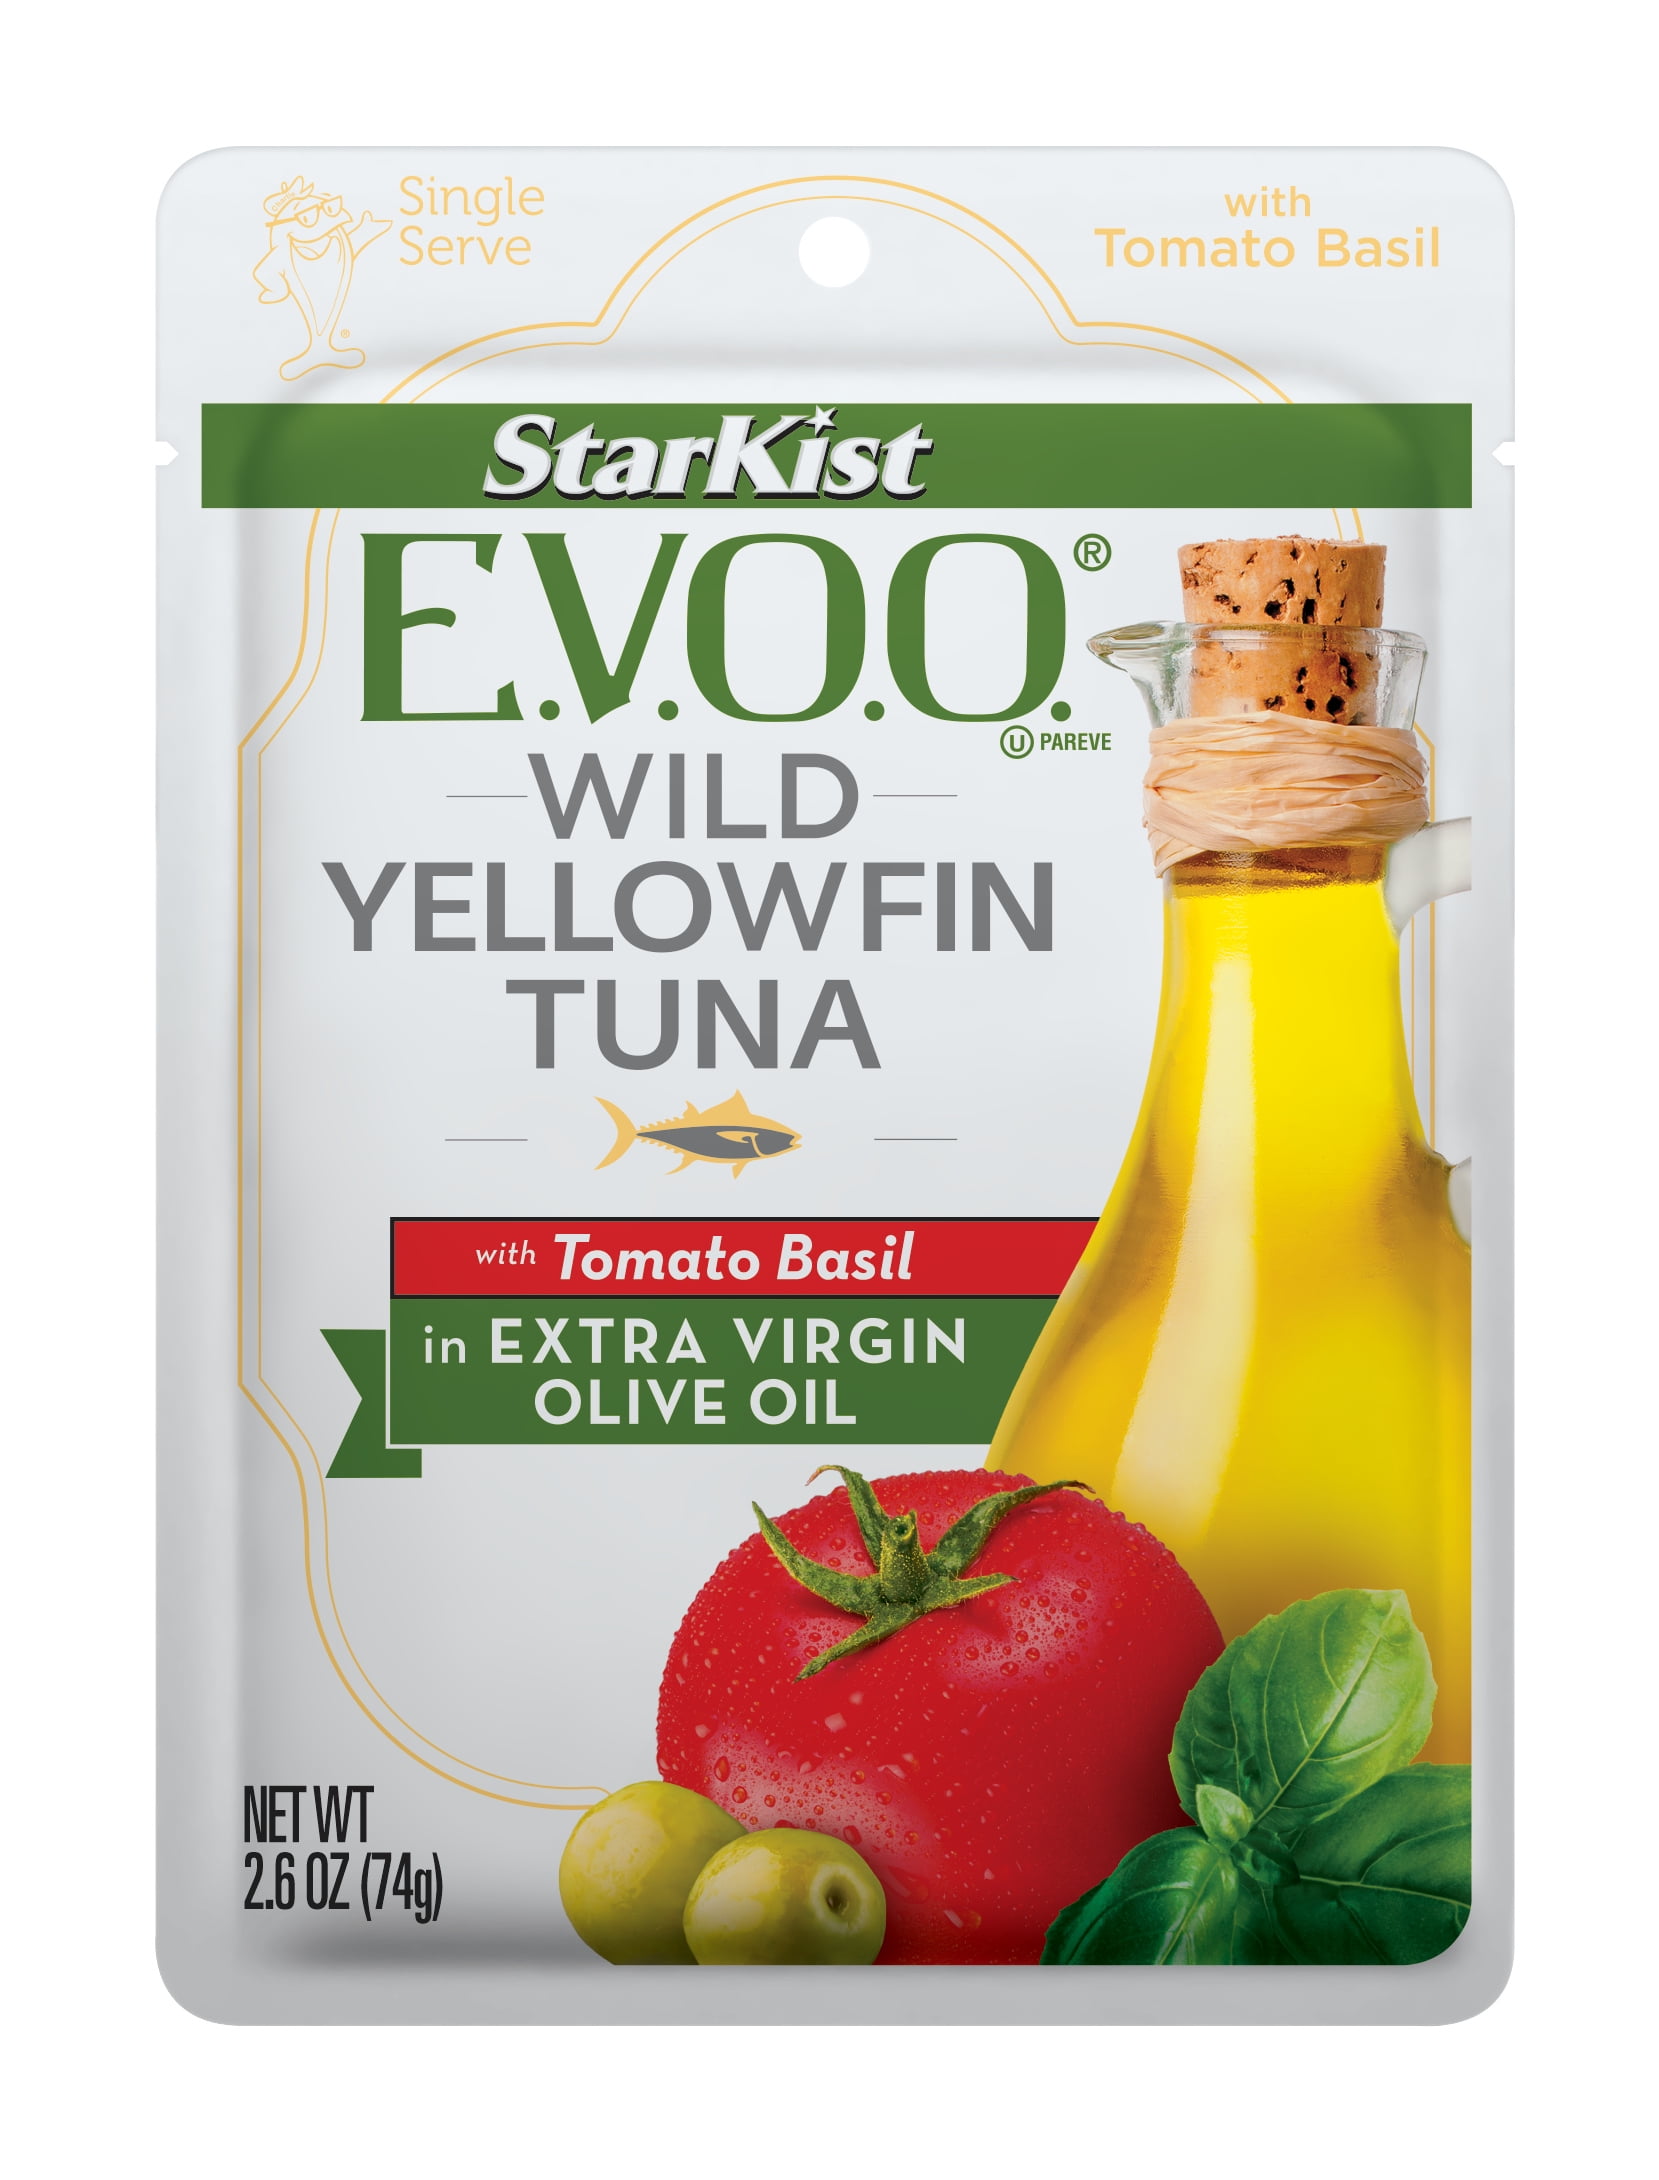 StarKist E.V.O.O. Wild Yellowfin Tuna in Extra Virgin Olive Oil, Tomato Basil, 2.6 oz Pouch